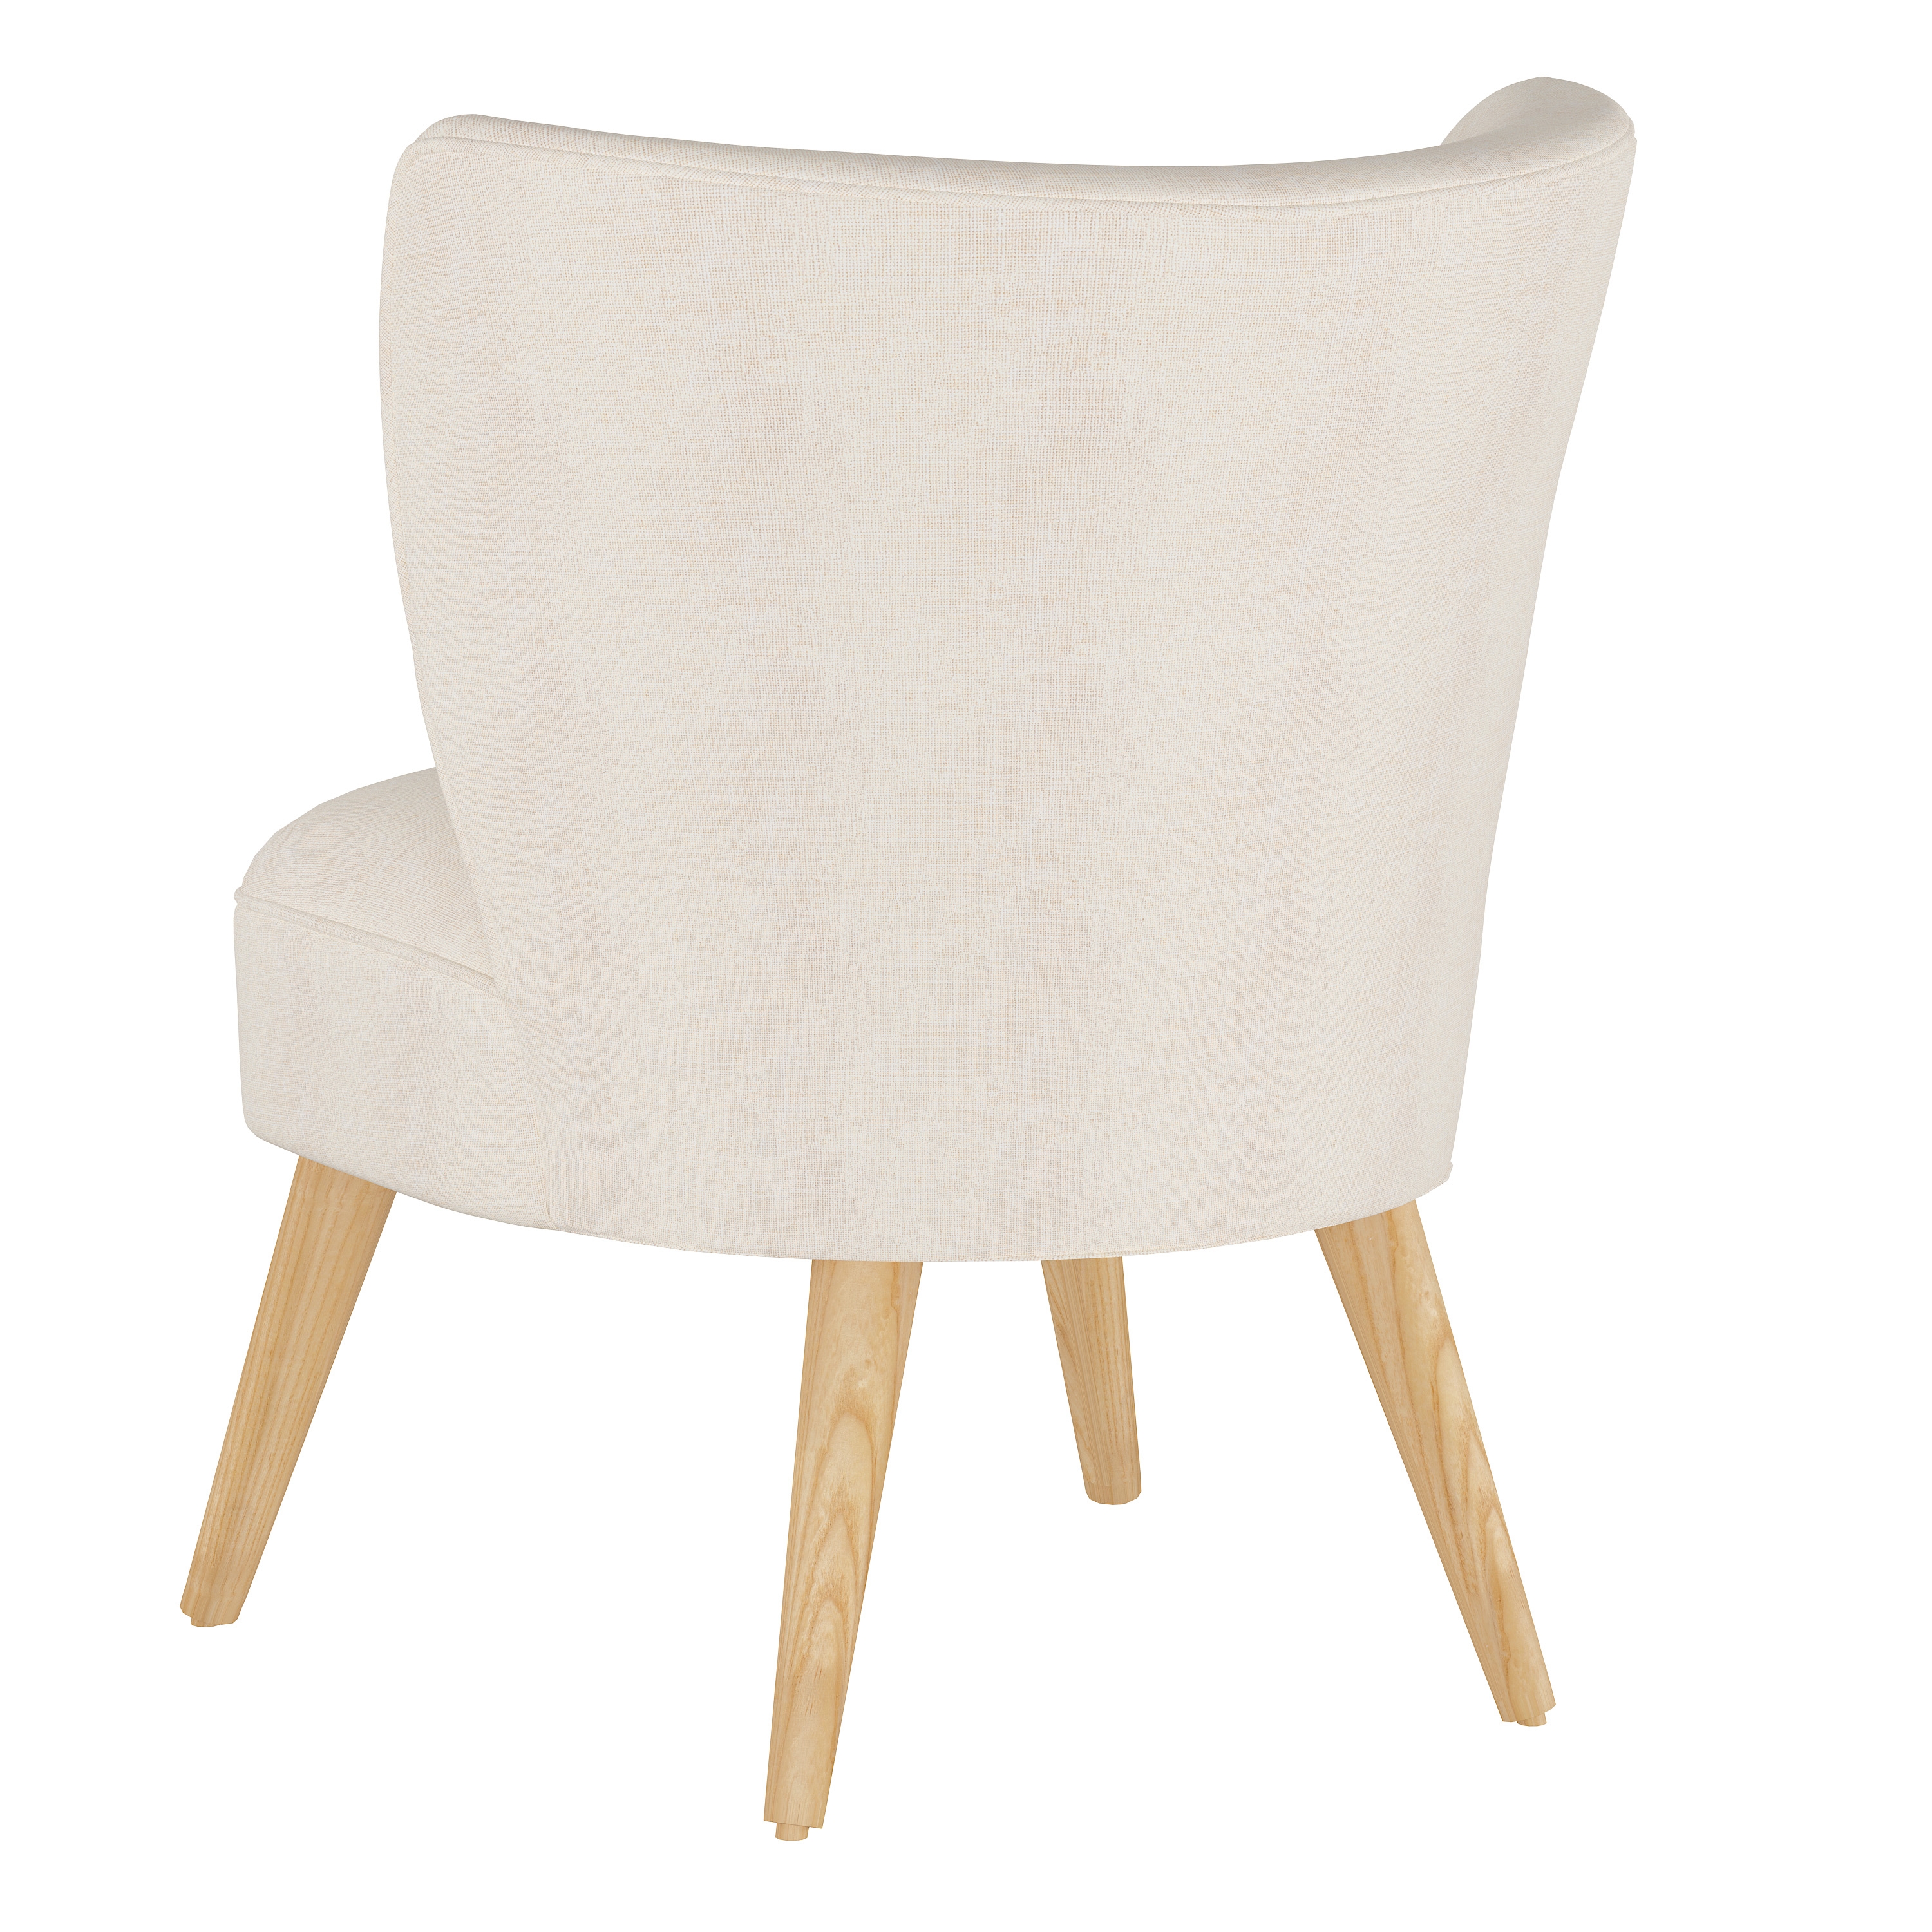 Altgeld Chair - Image 2